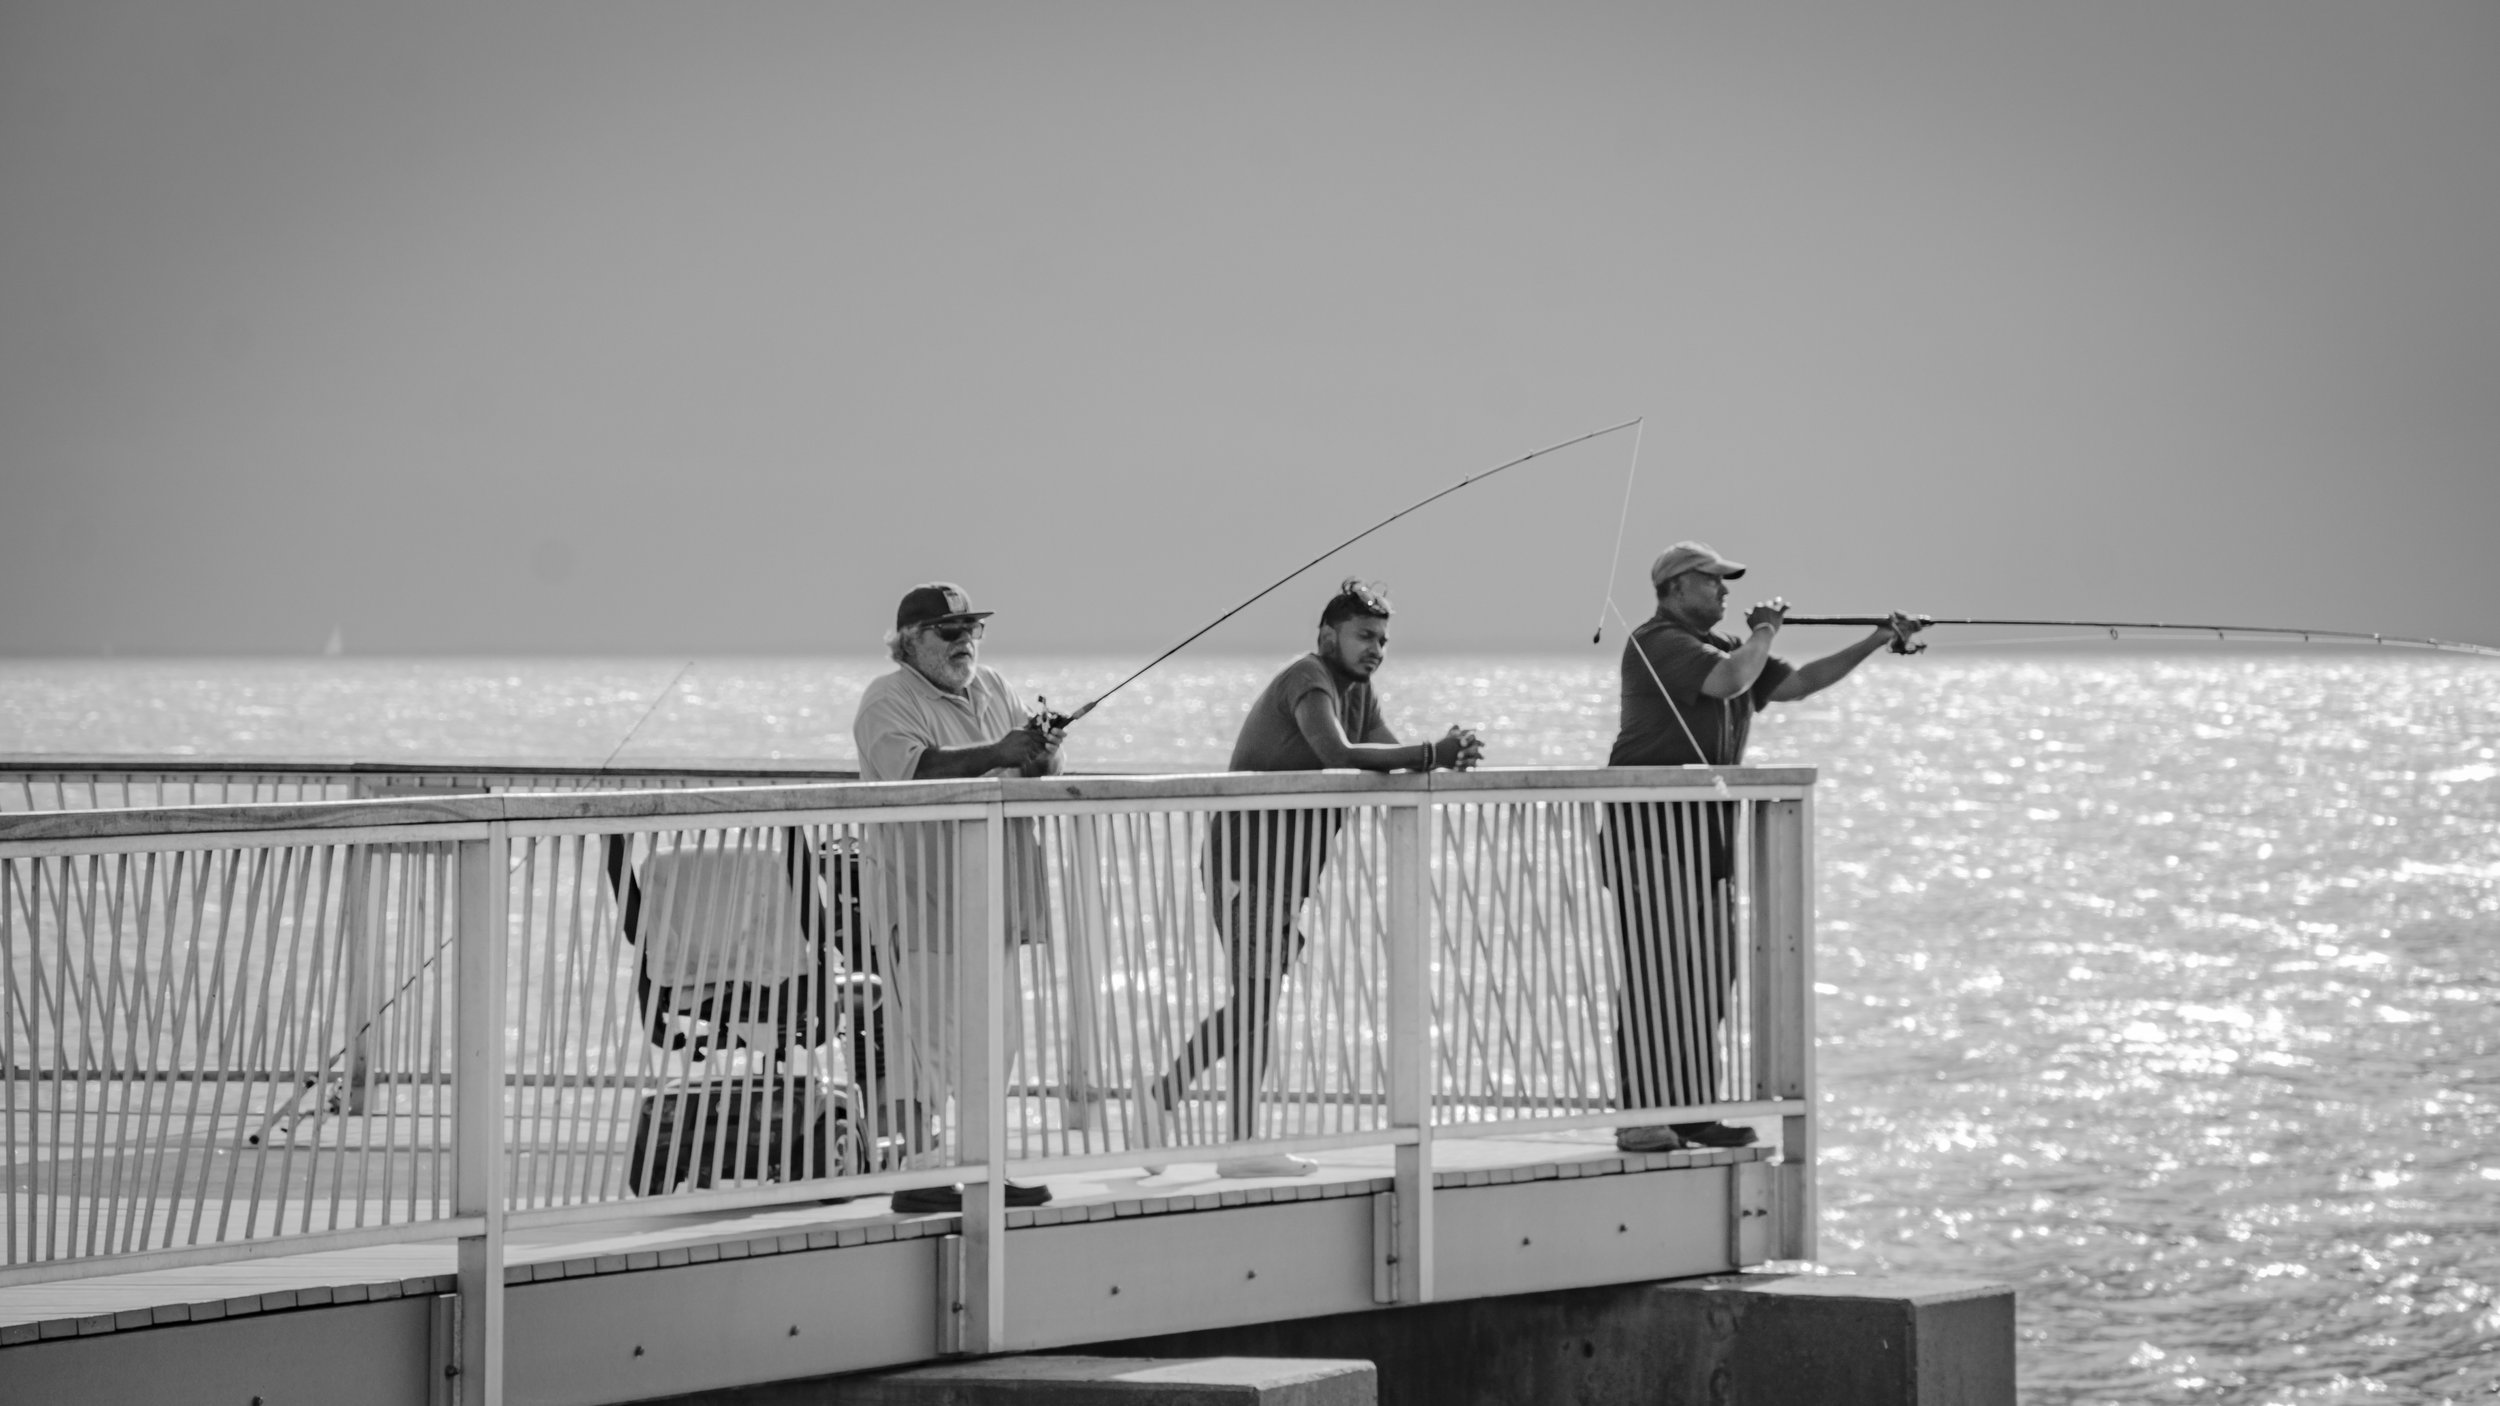 fishers on pier v3 b-w.jpg